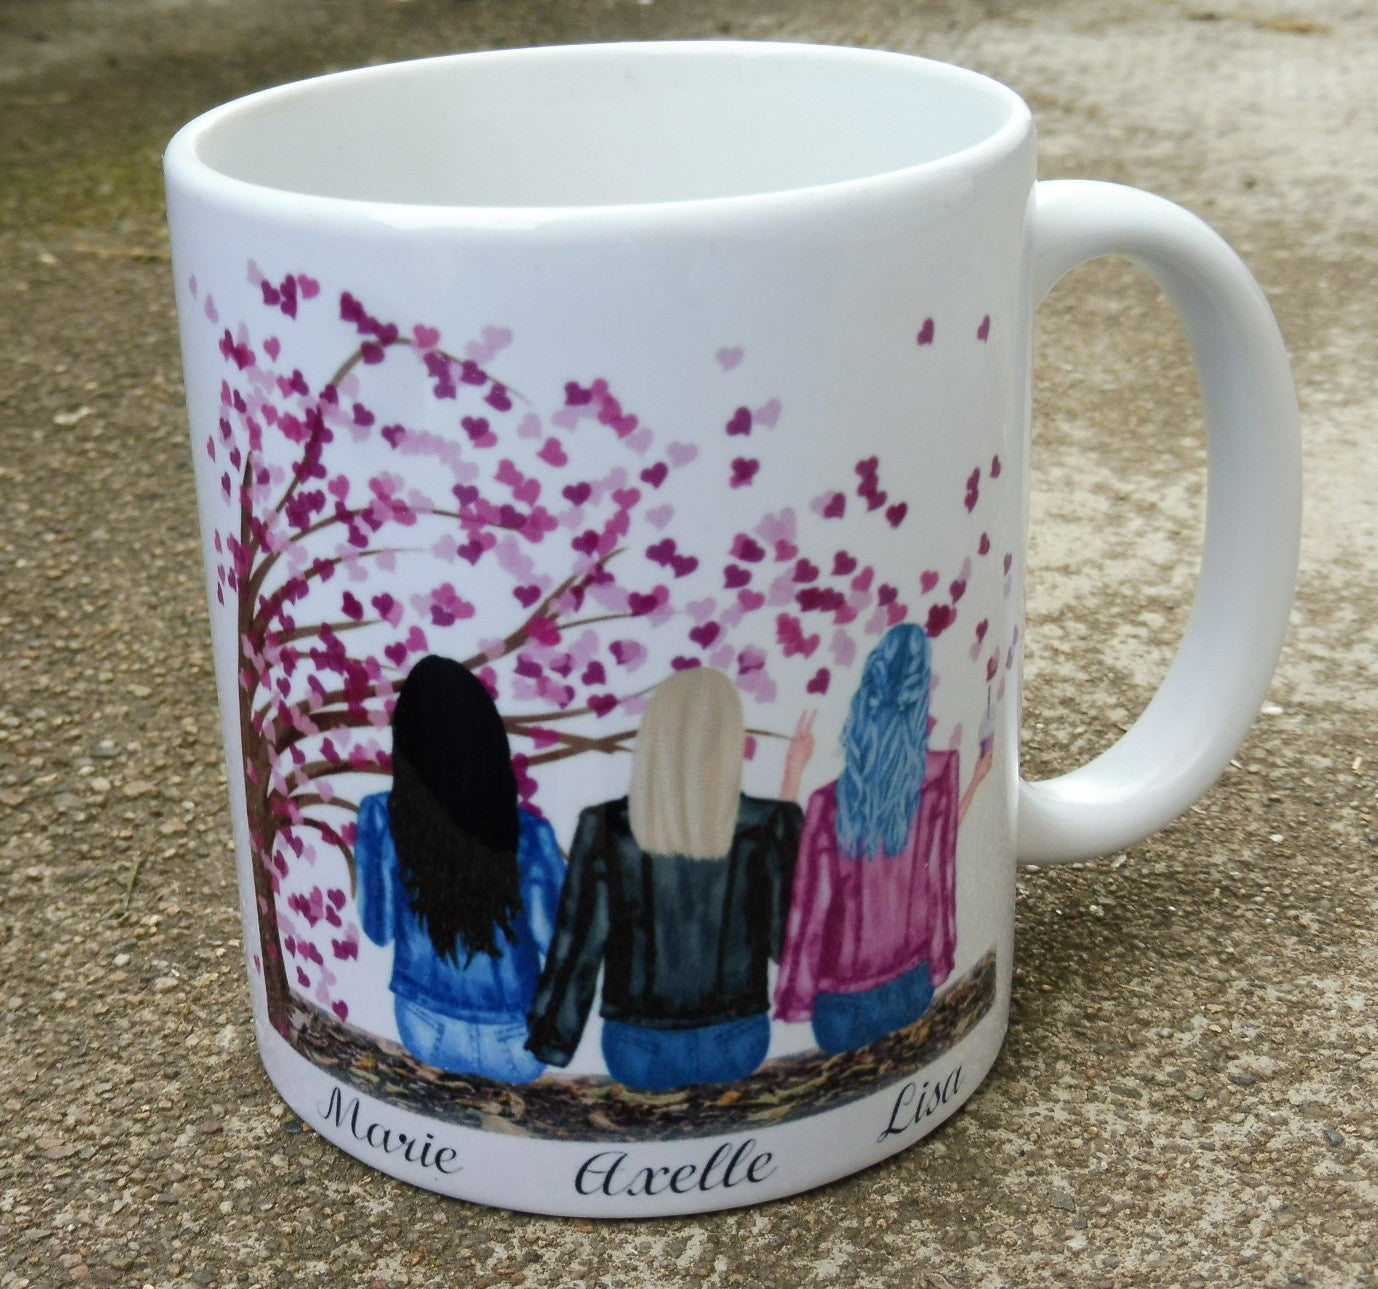 Personalized friends mug - Women's gift idea - Friends - Colleagues – LES  CREAS D'ANITA